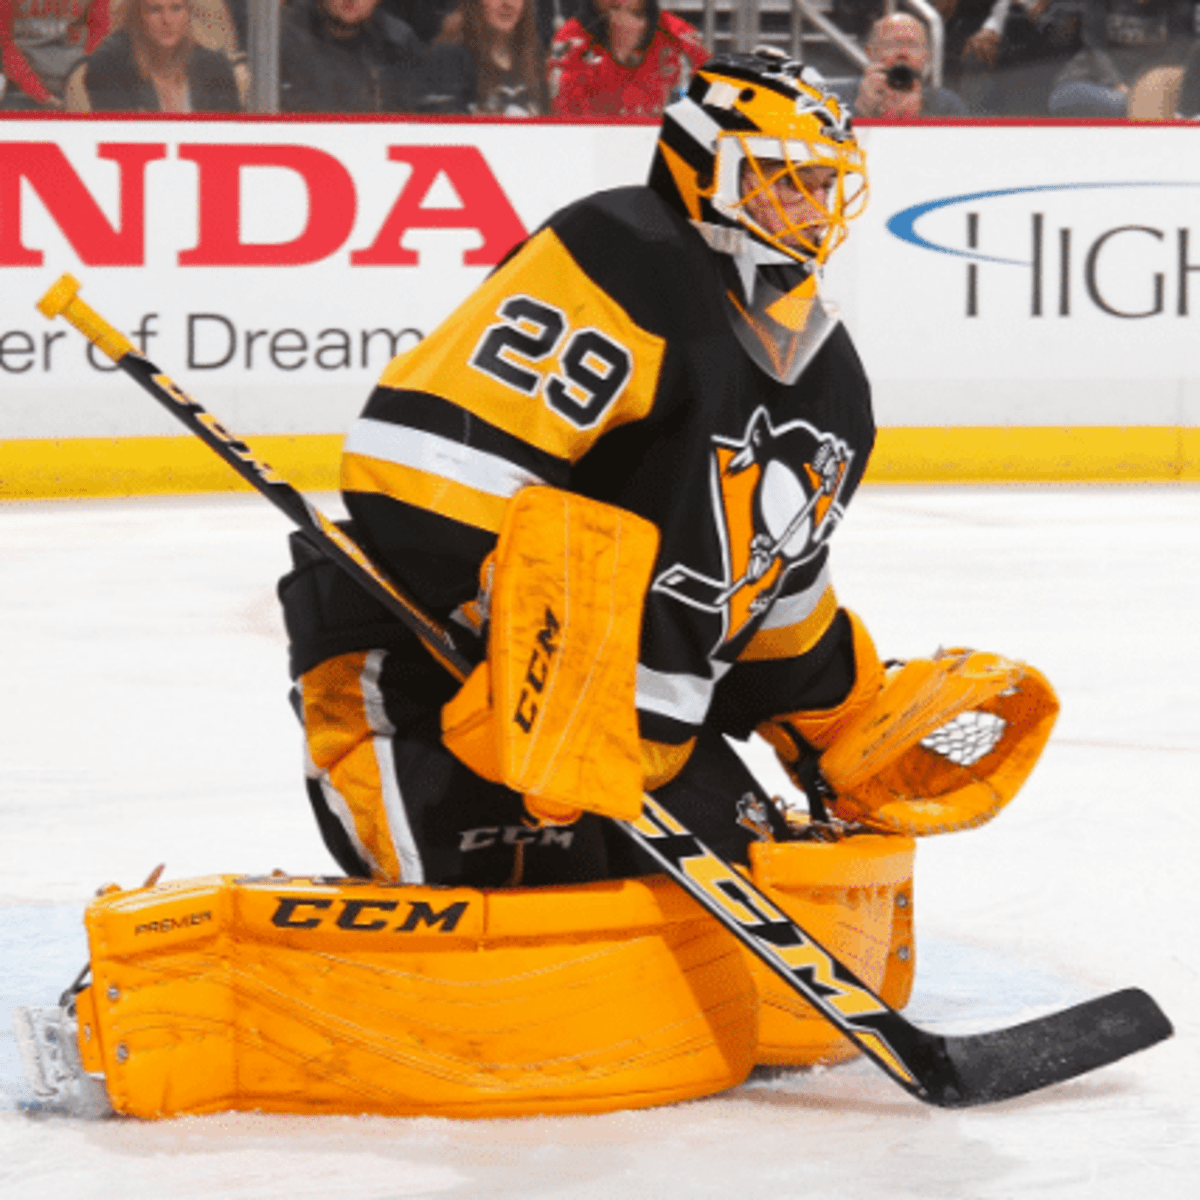 Marc Andre Fleury  Pittsburgh penguins hockey, Nhl penguins, Penguins  hockey